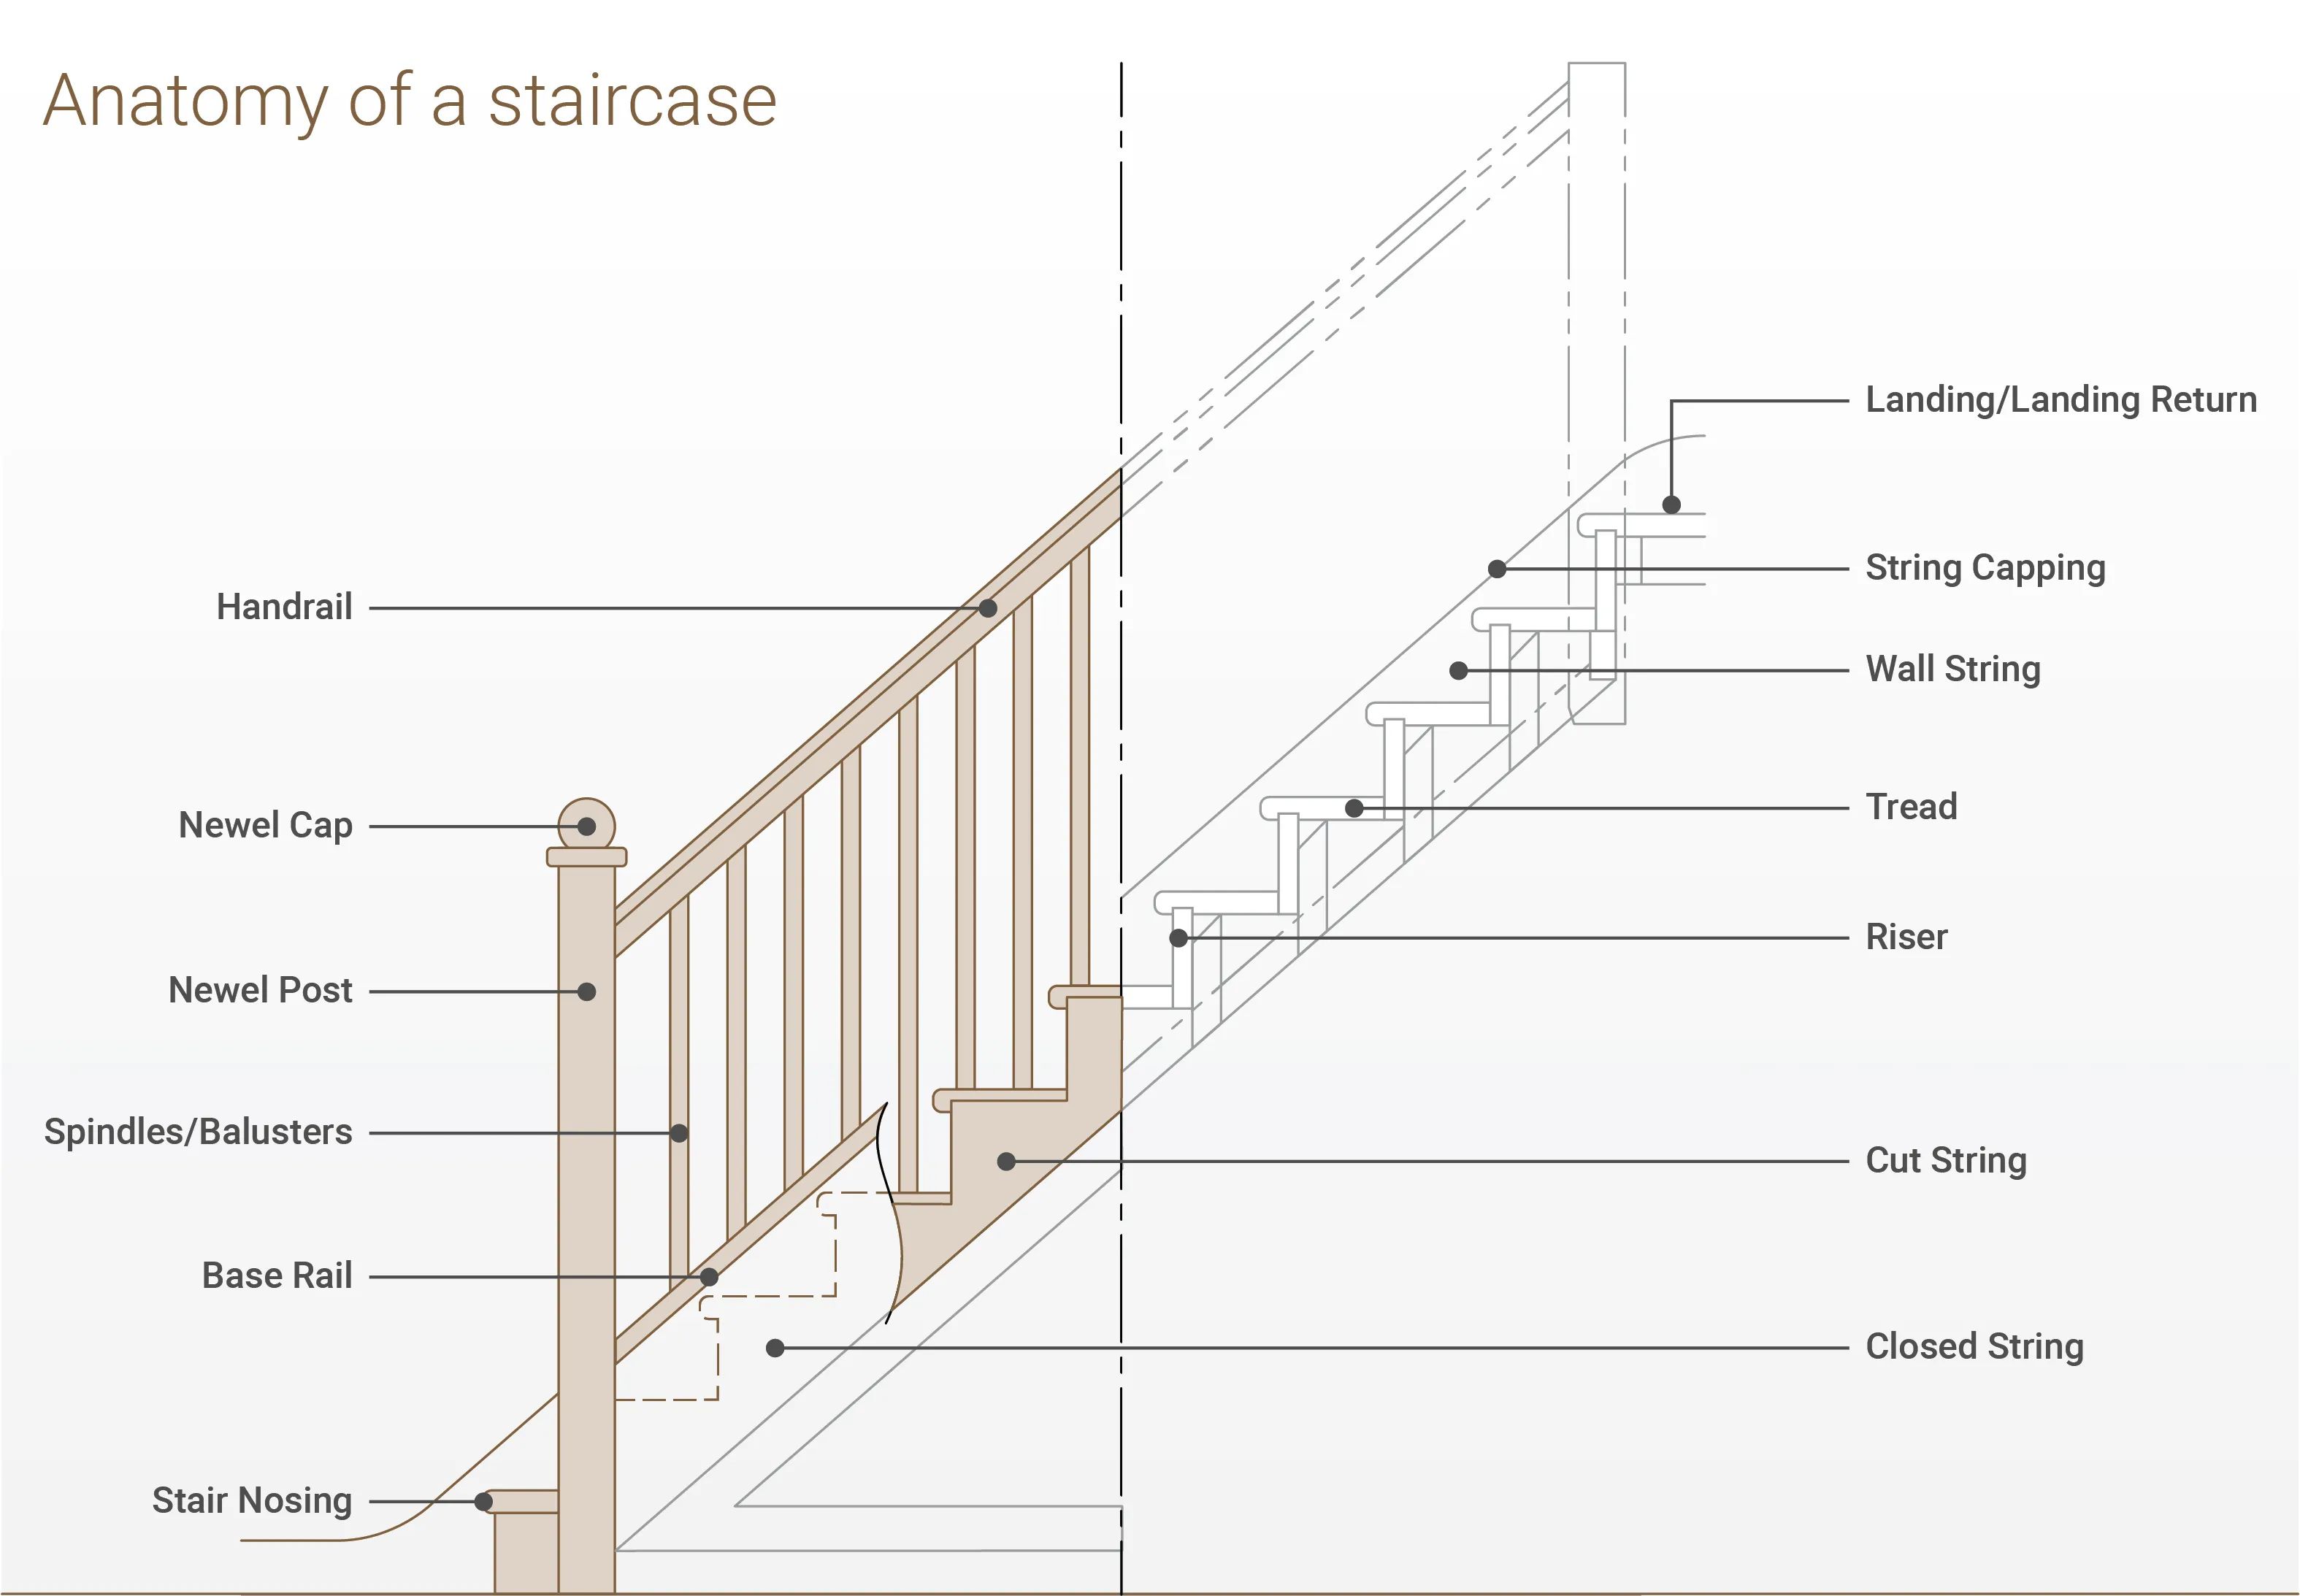 staircase anatomy